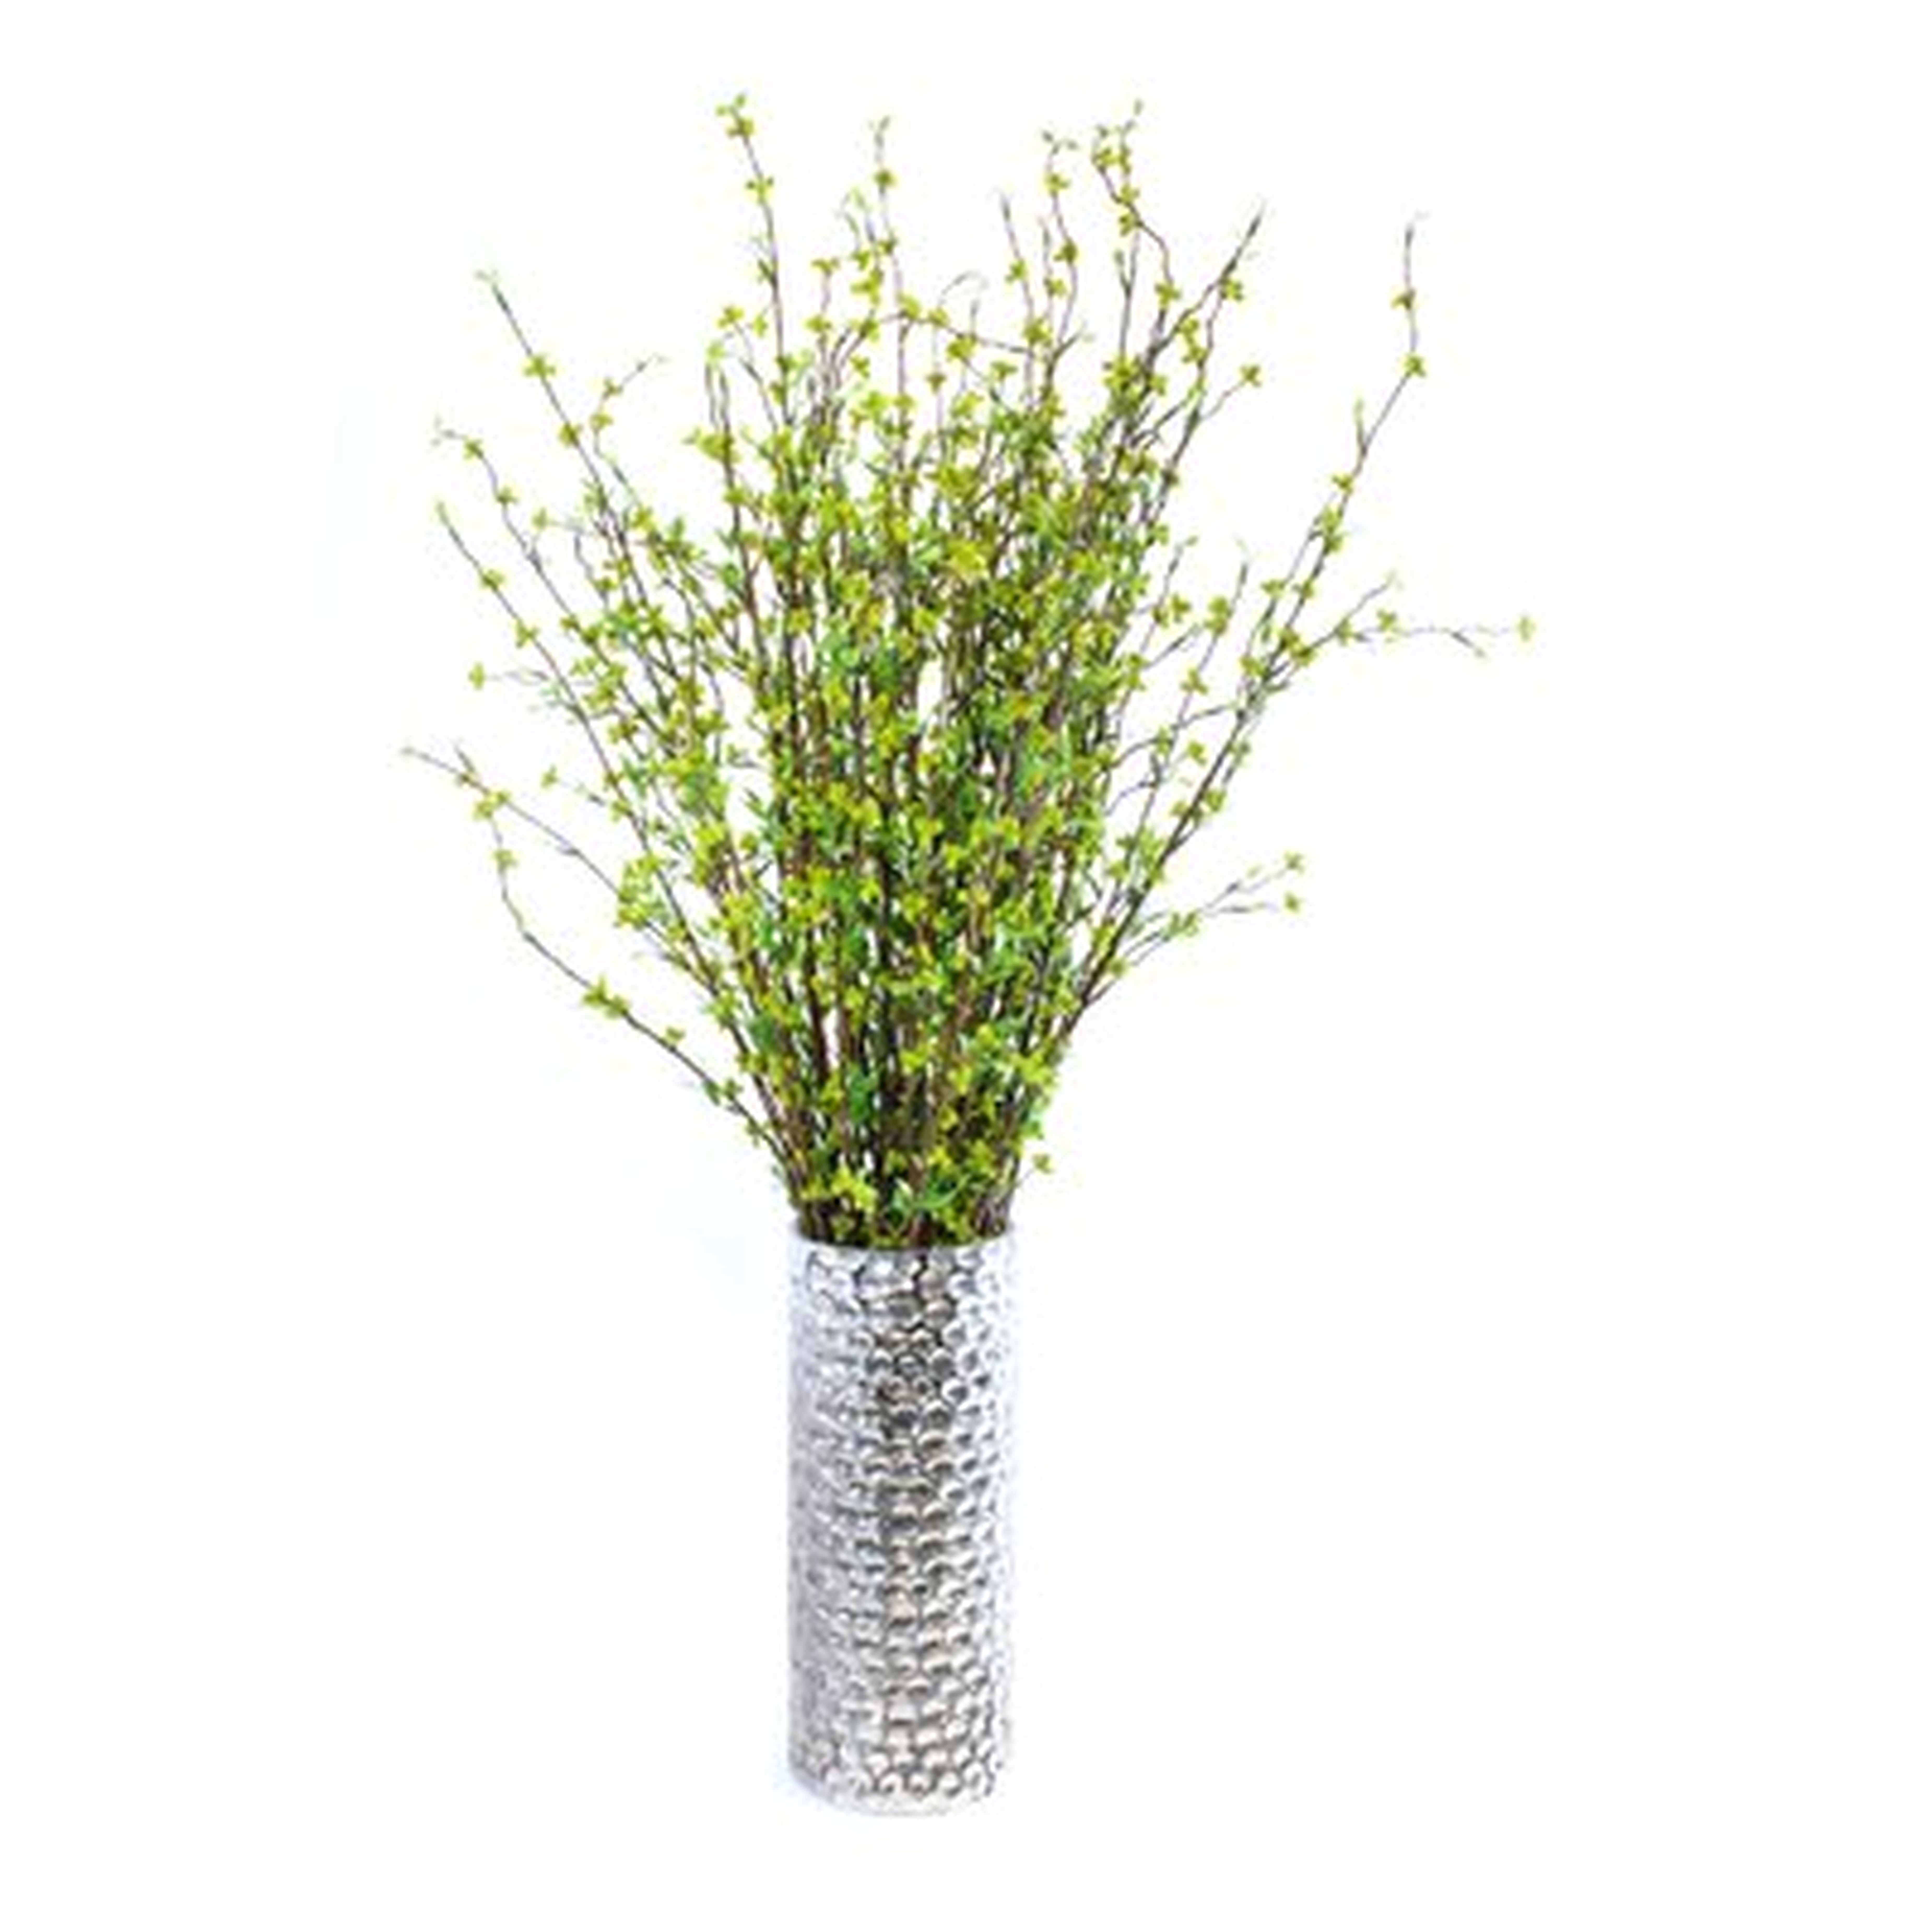 Faux Grass in Decorative Vase - Wayfair